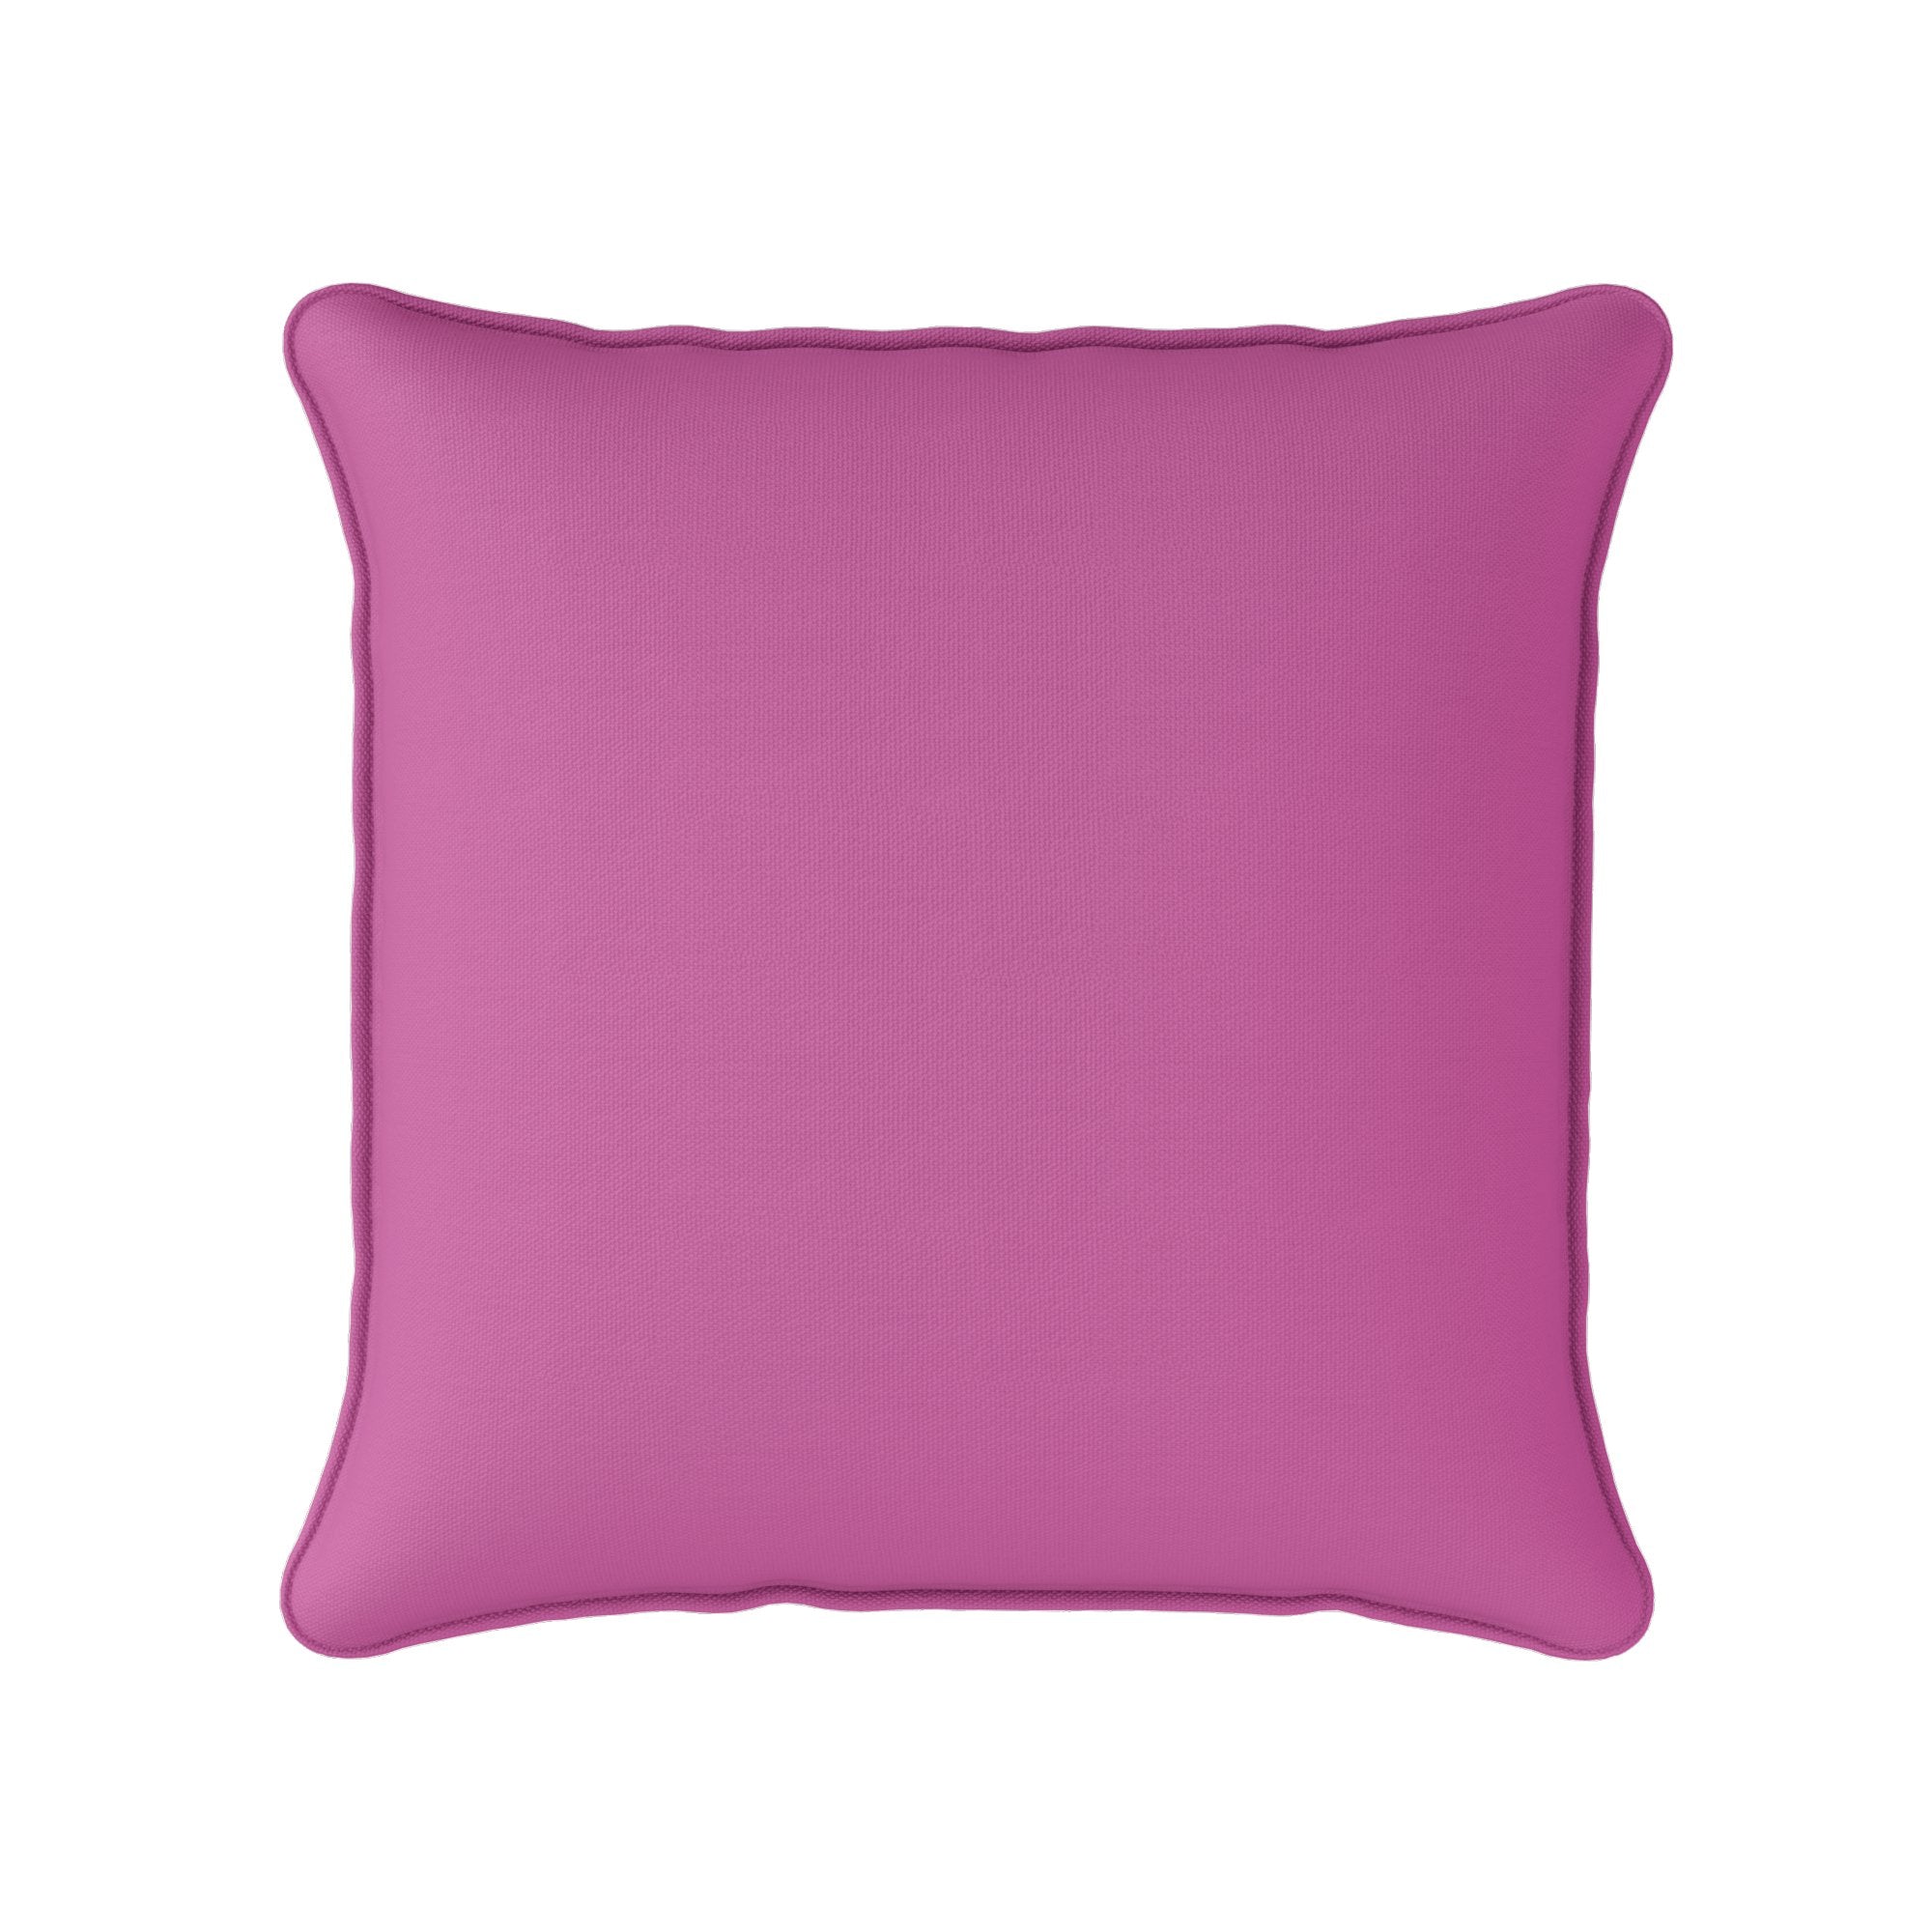 Perfectly Plain Cushion - Pinks - Hydrangea Lane Home